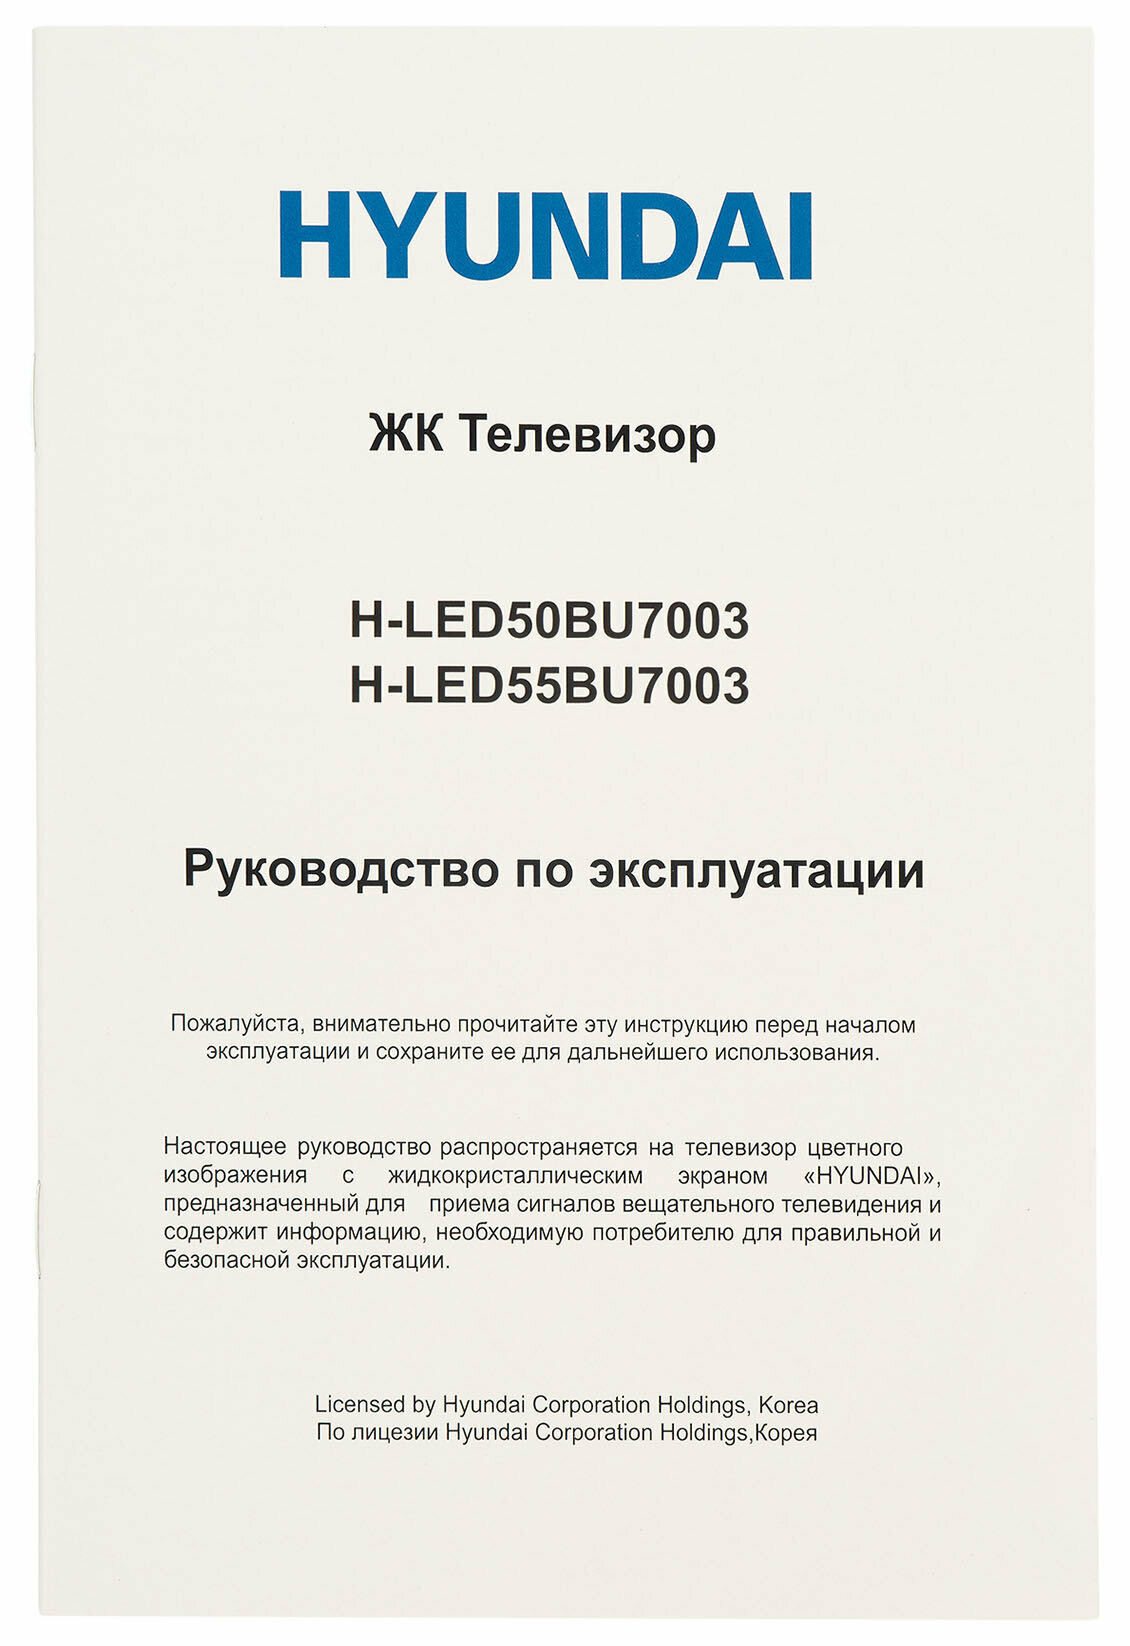 HYUNDAI Телевизор LED Hyundai 50" H-LED50BU7003 Яндекс. ТВ Frameless черный 4K Ultra HD 60Hz DVB-T DVB-T2 DVB-C DVB-S DVB-S2 USB WiFi Smart TV H-LED50BU7003